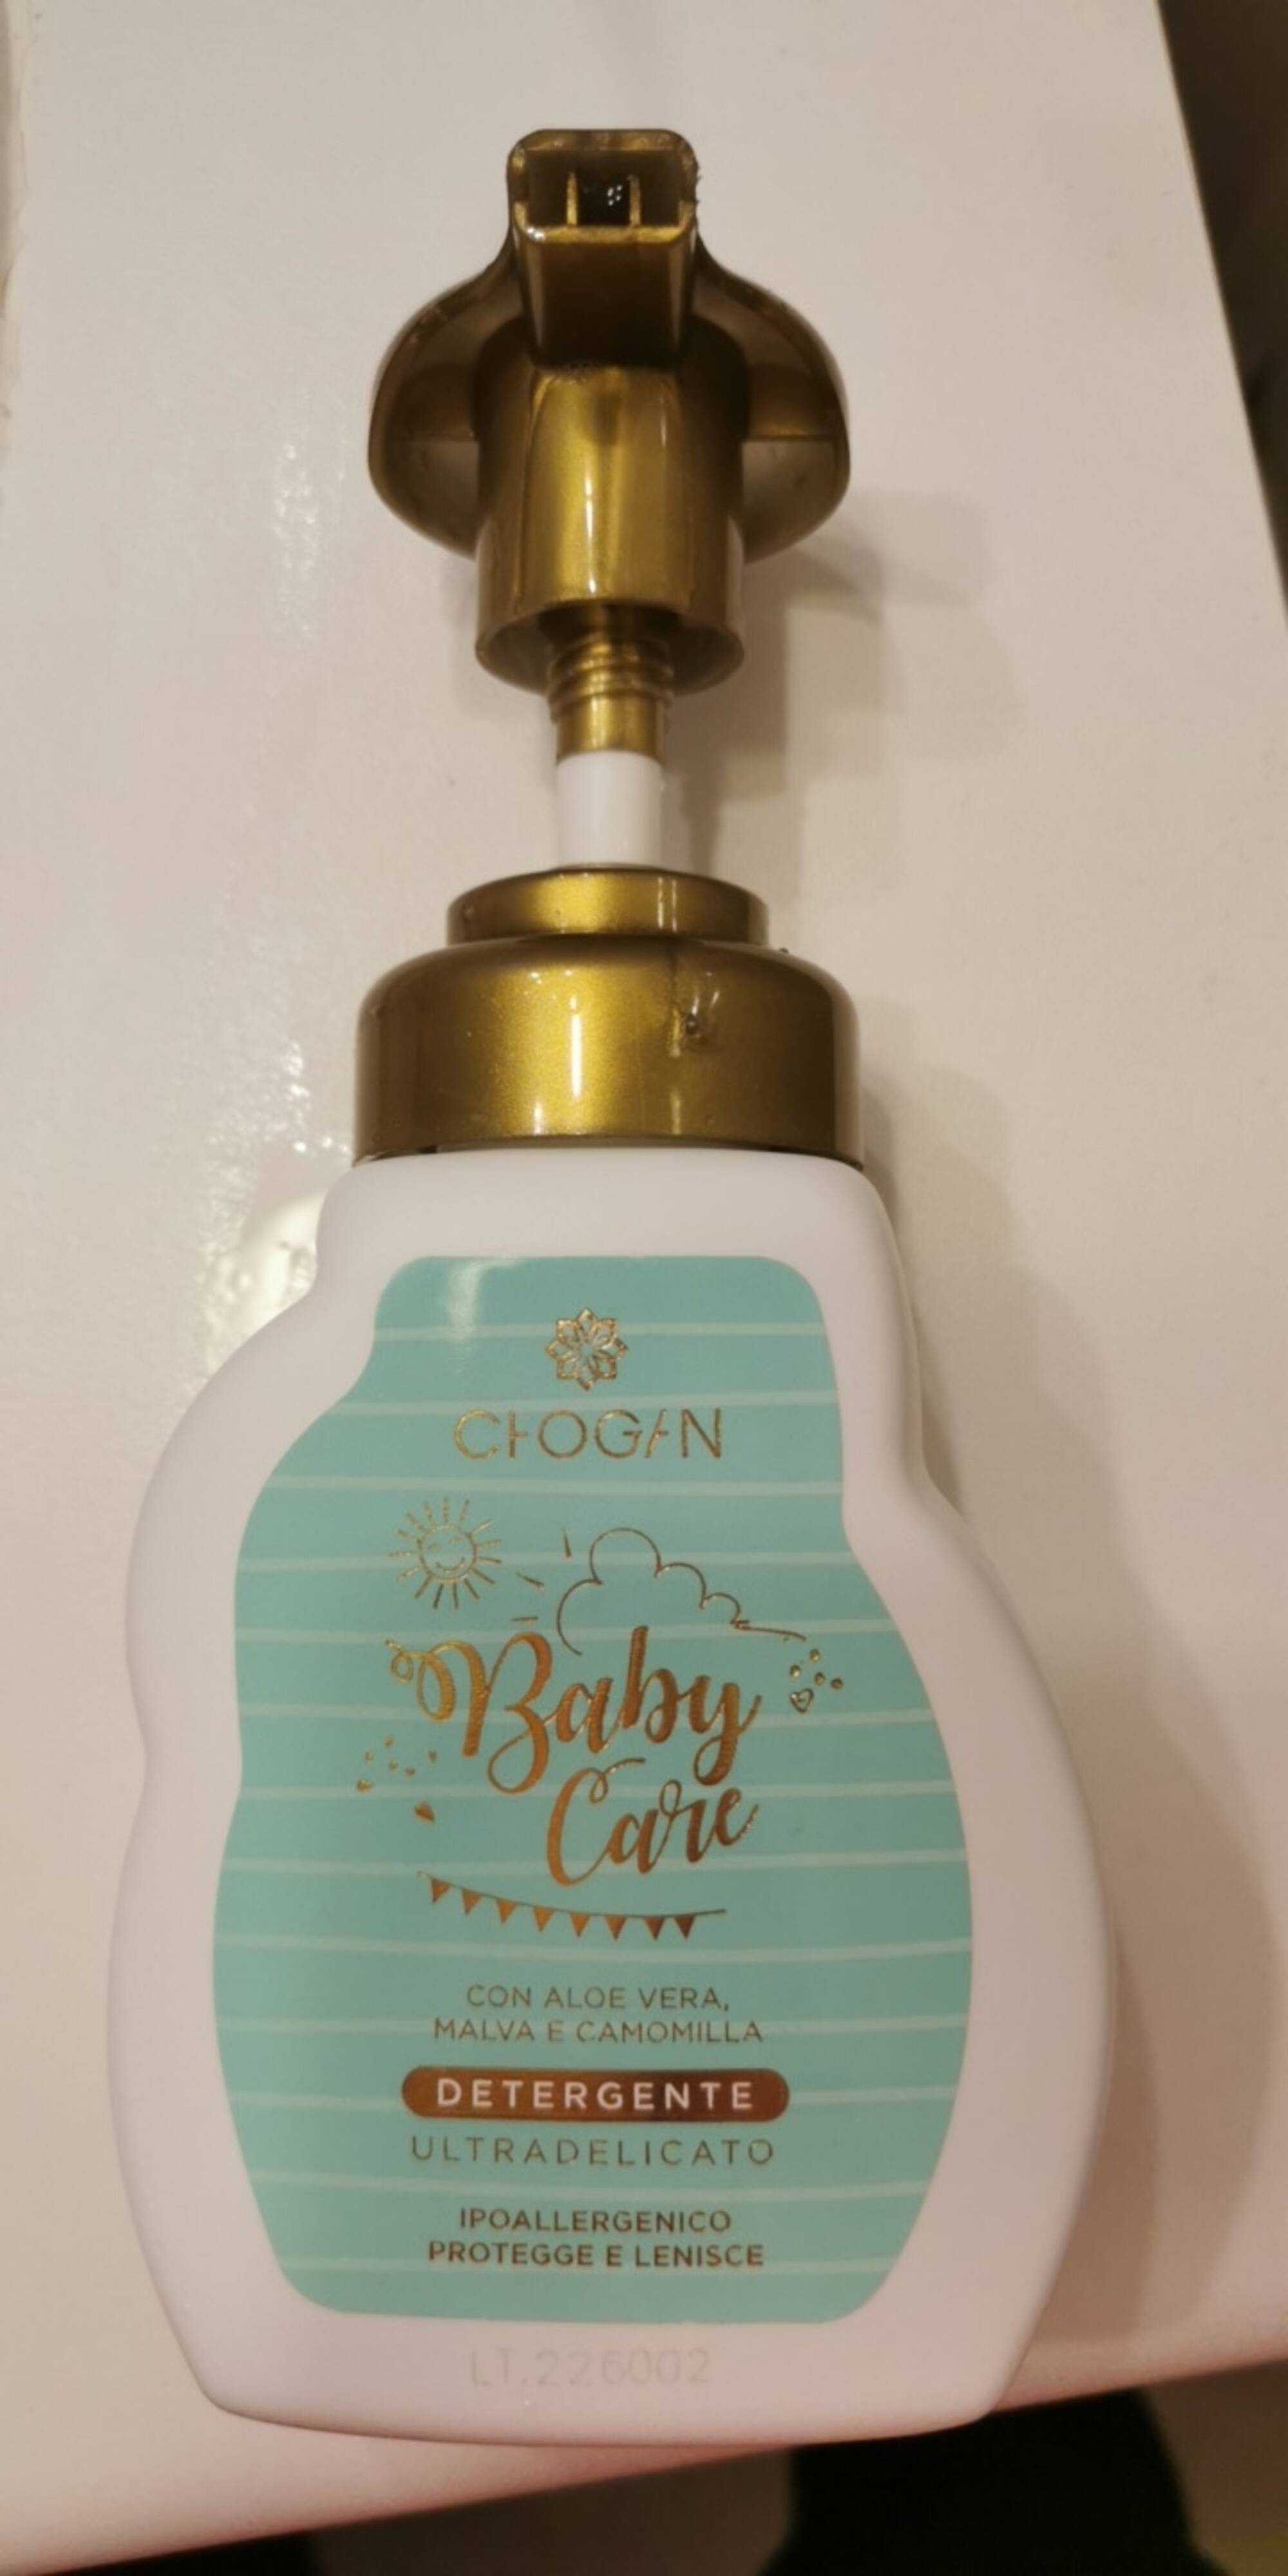 CHOGAN - Baby care - Detergente ultradelicato